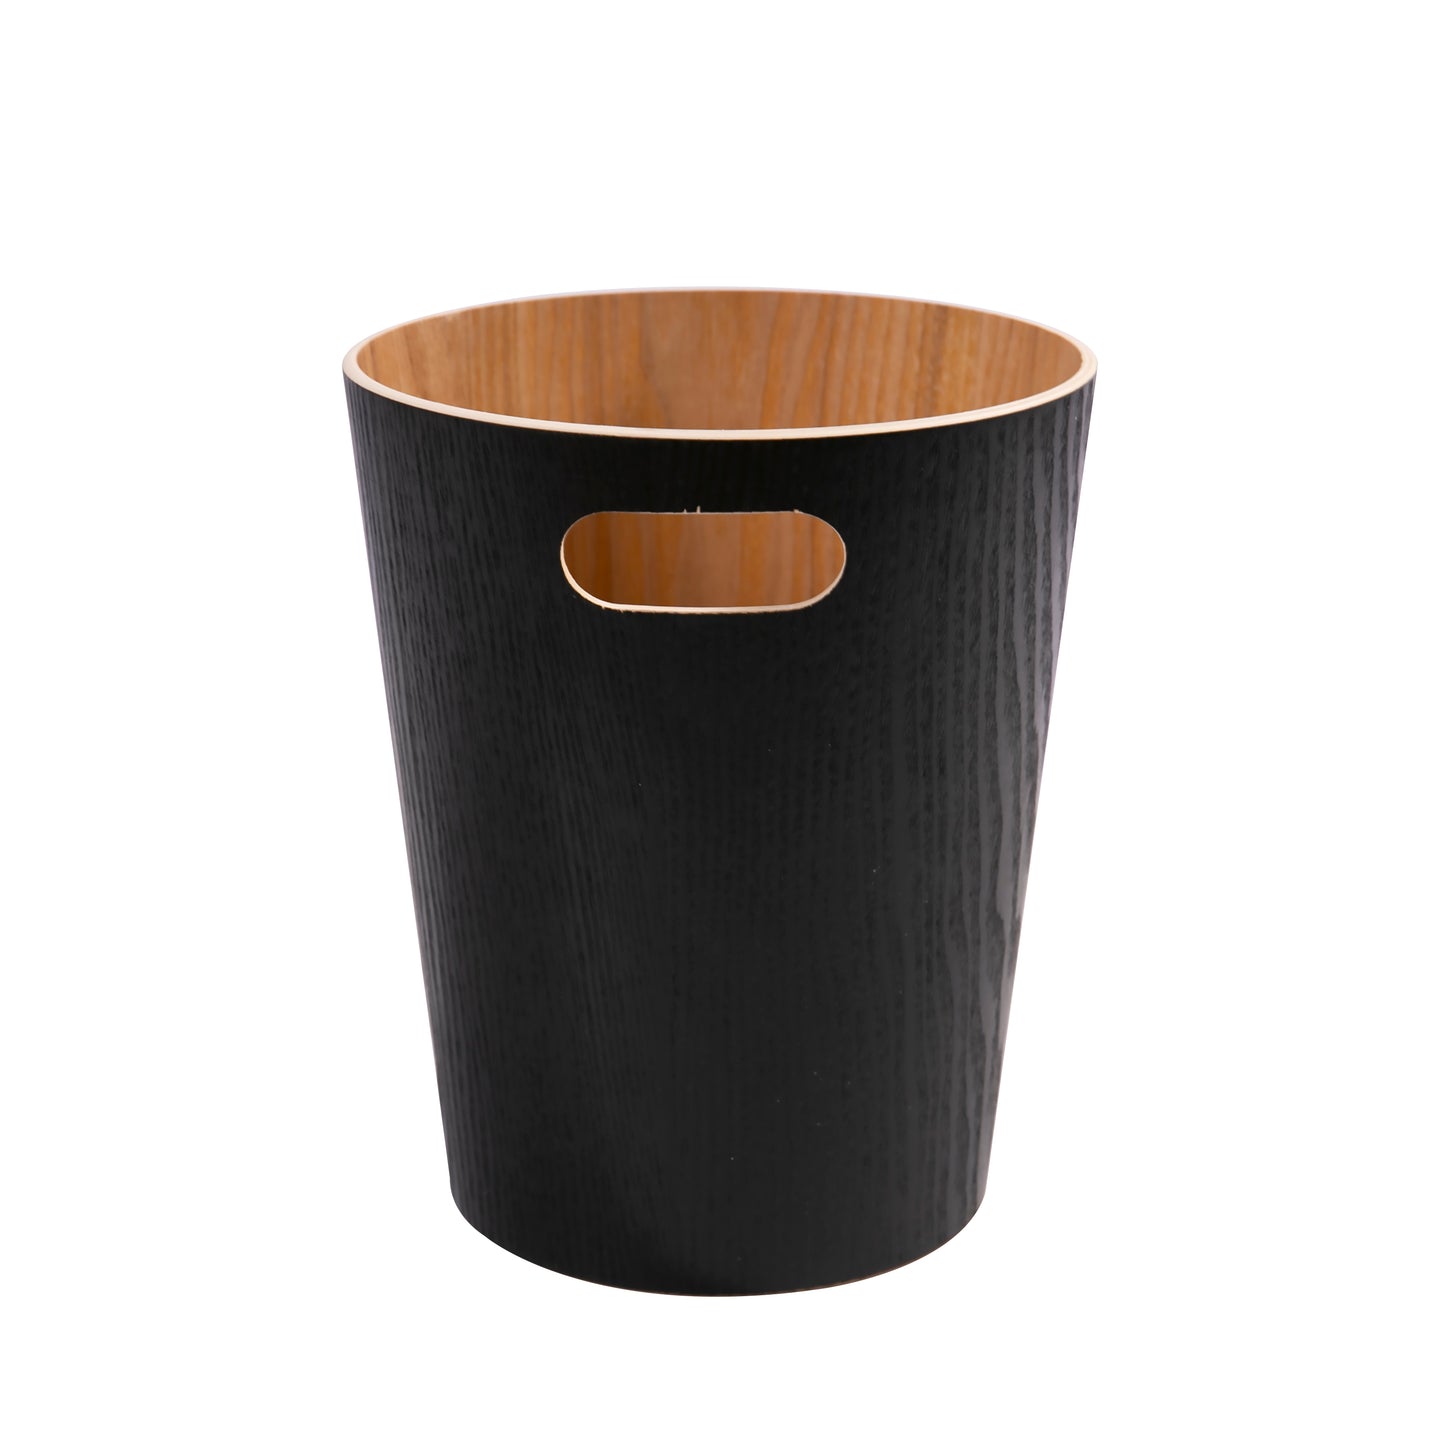 5 Liter Wooden Trash Bin - Black